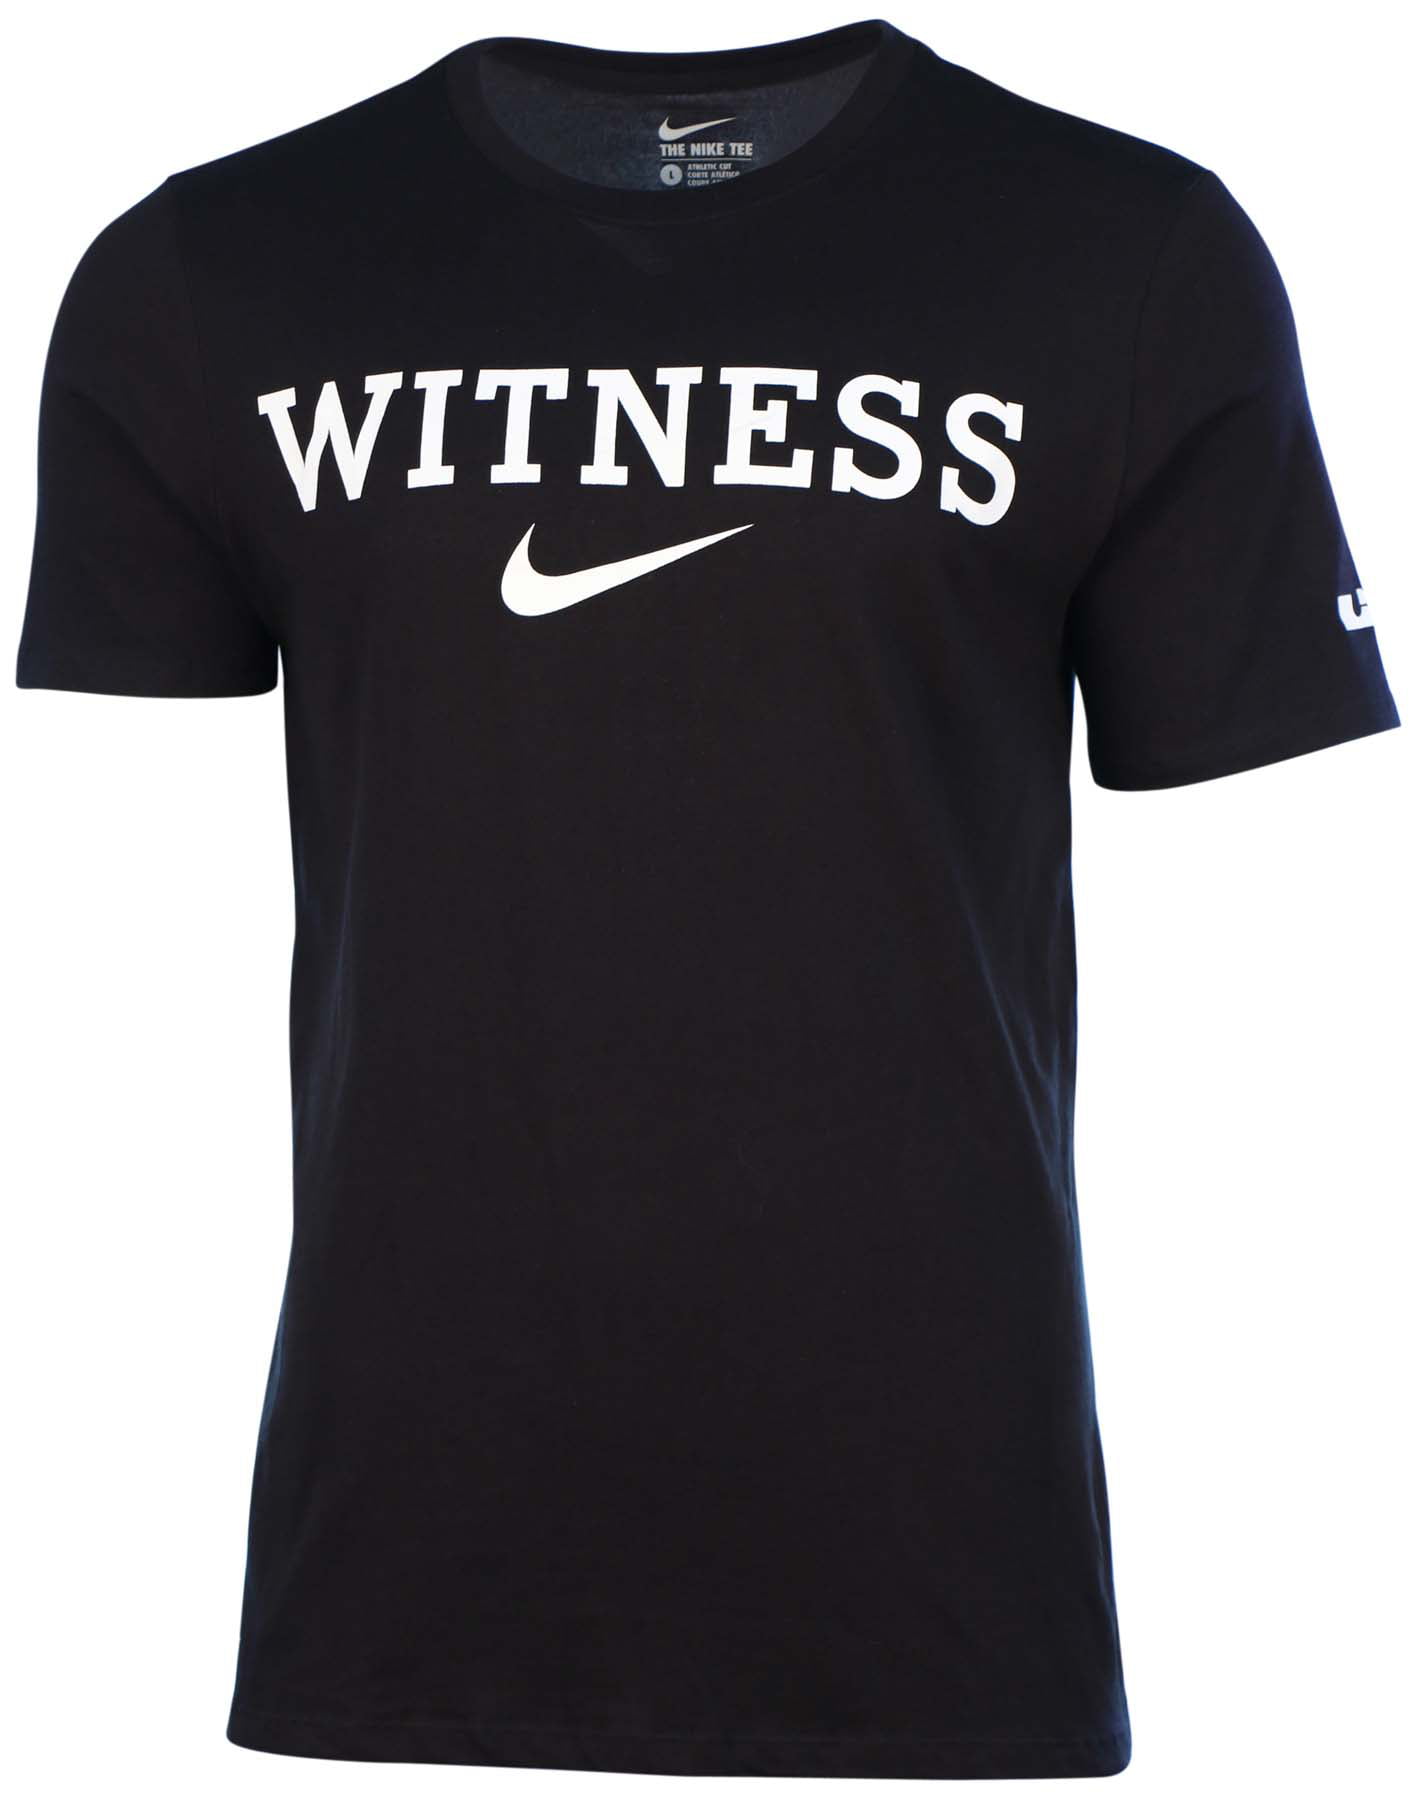 witness t shirt nike online -